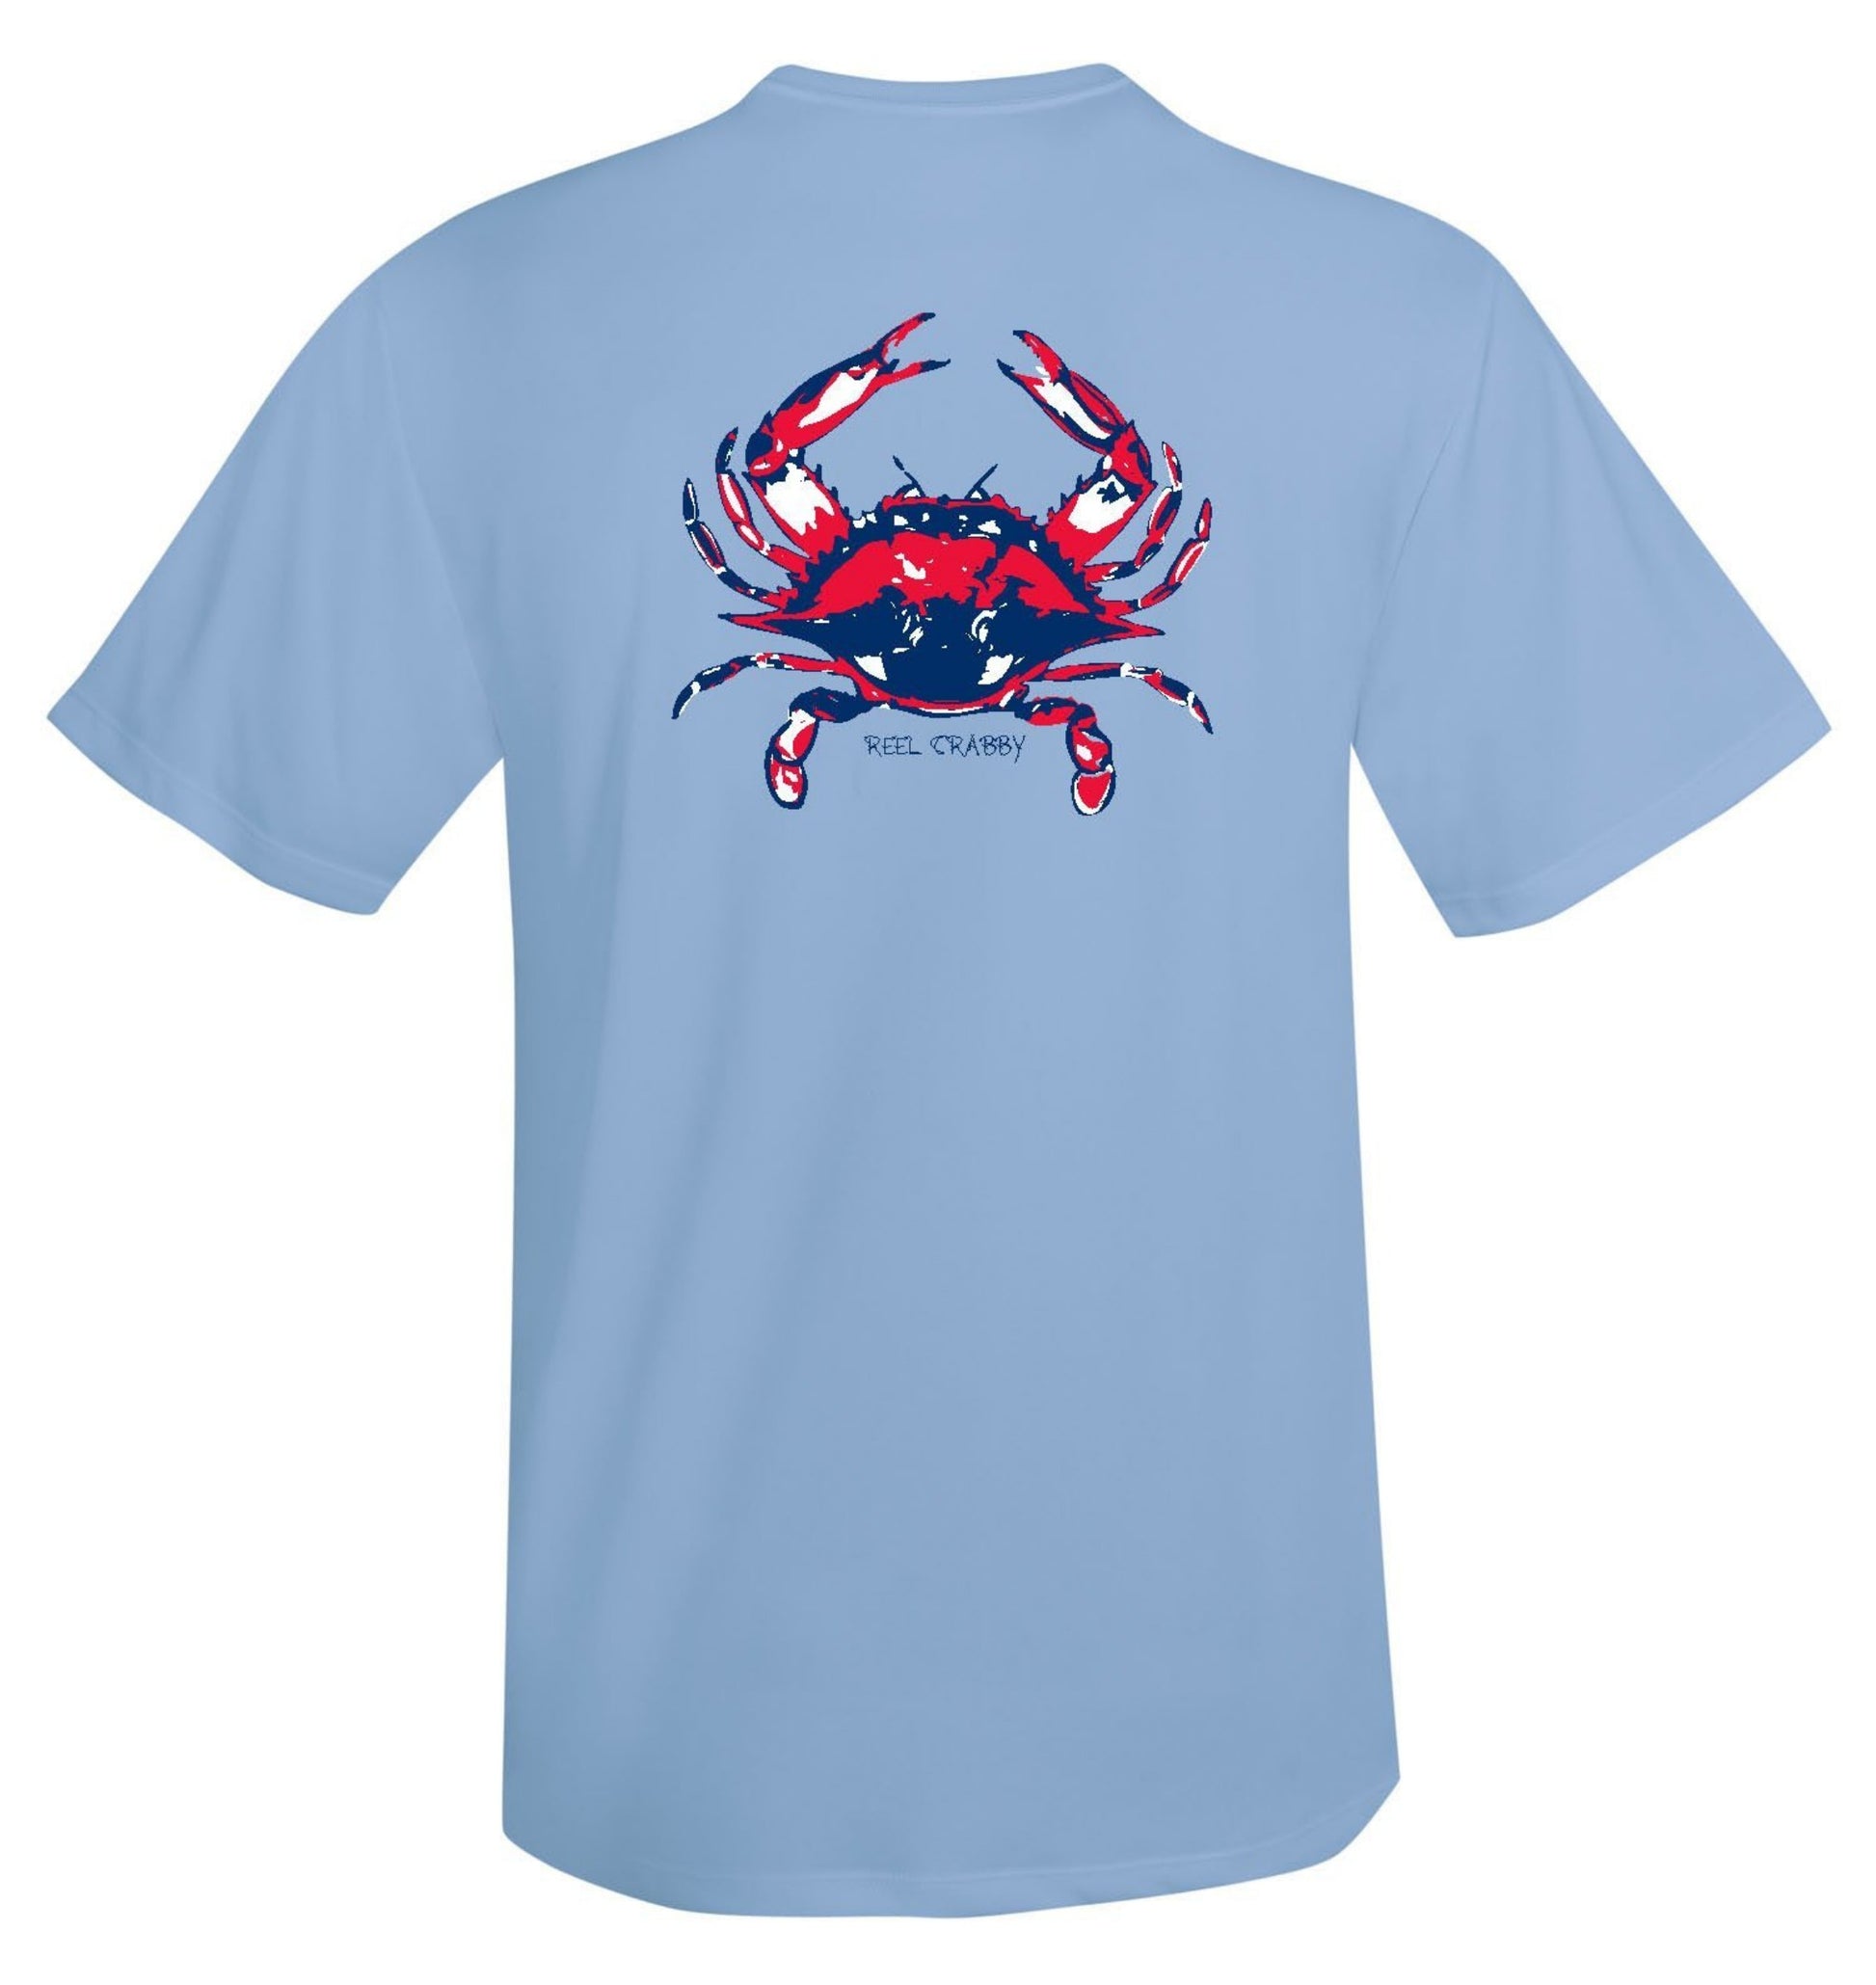 Blue Crab Reel Crabby Performance Dry-Fit Fishing 50+uv Shirt - Reel Fishy Apparel 2XL / Lt. Blue S/S - unisex